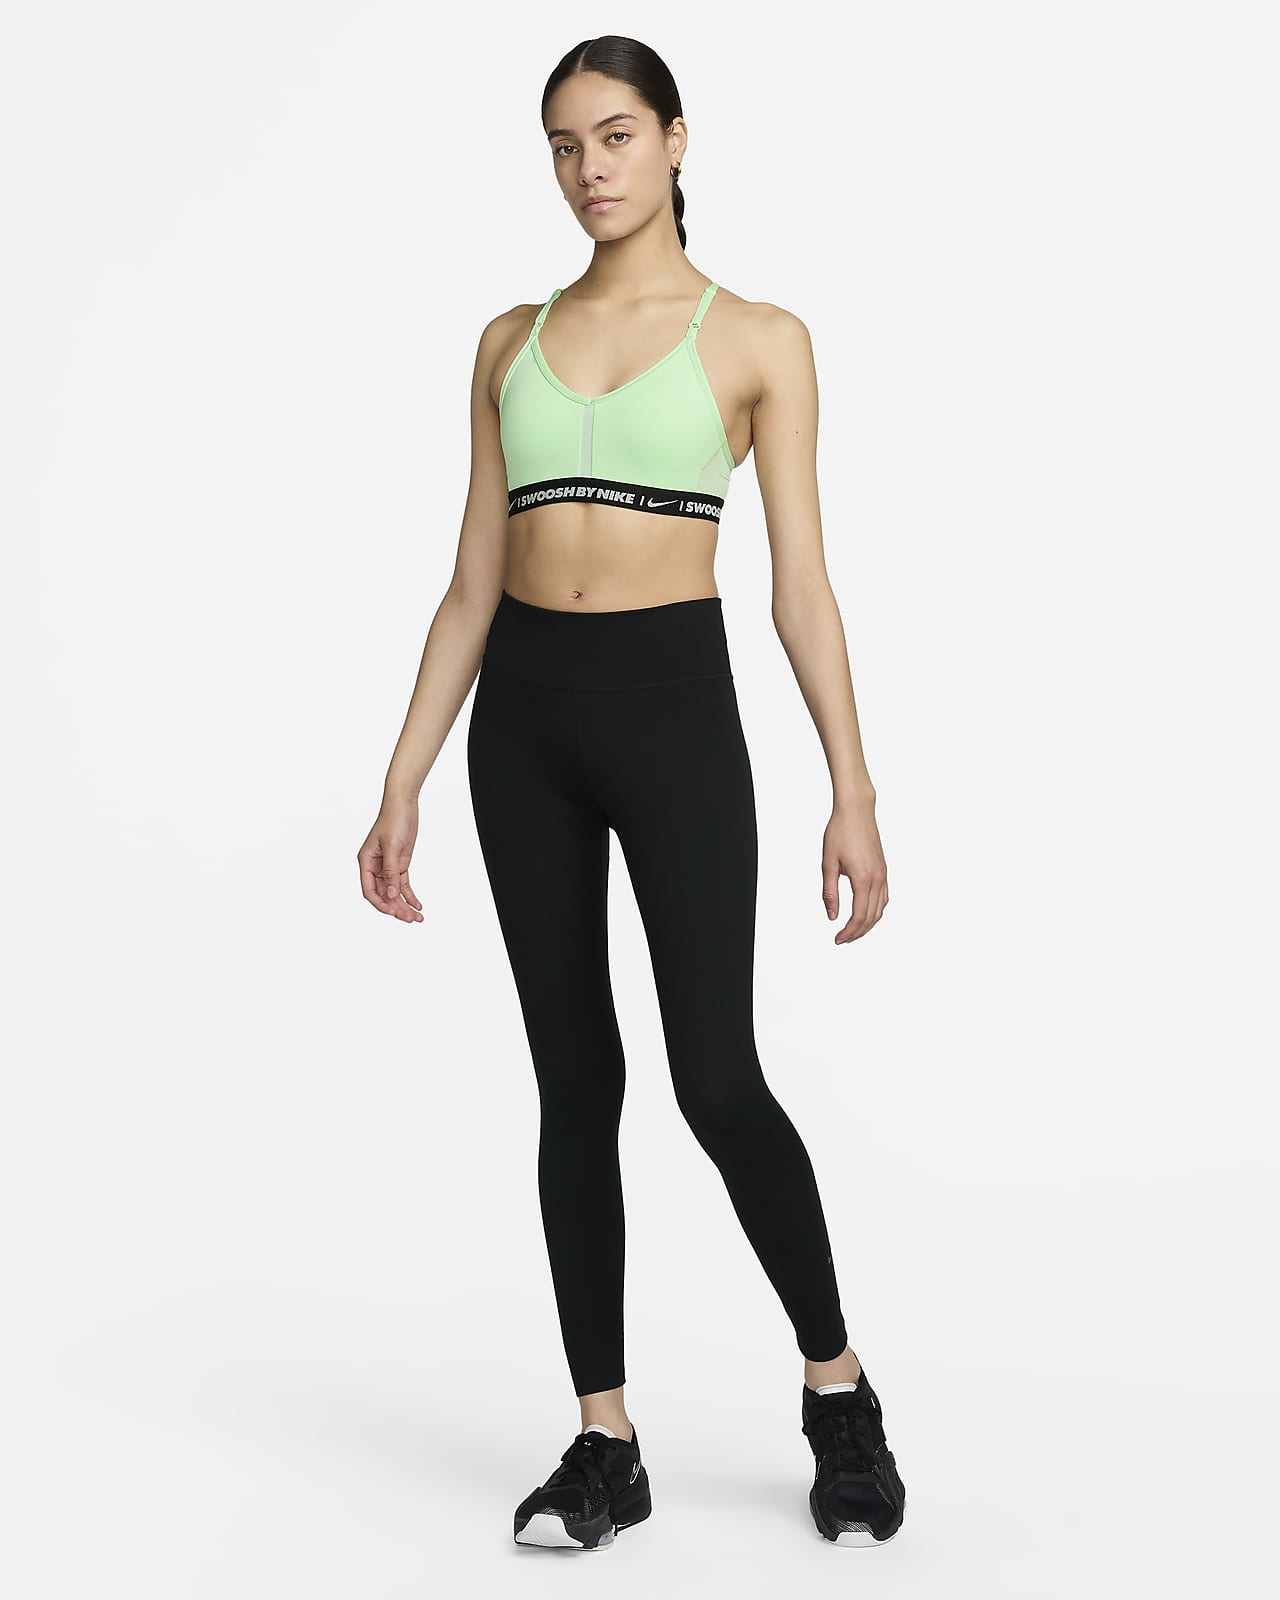 Nike Yoga Indy light support cross strap sports bra in black